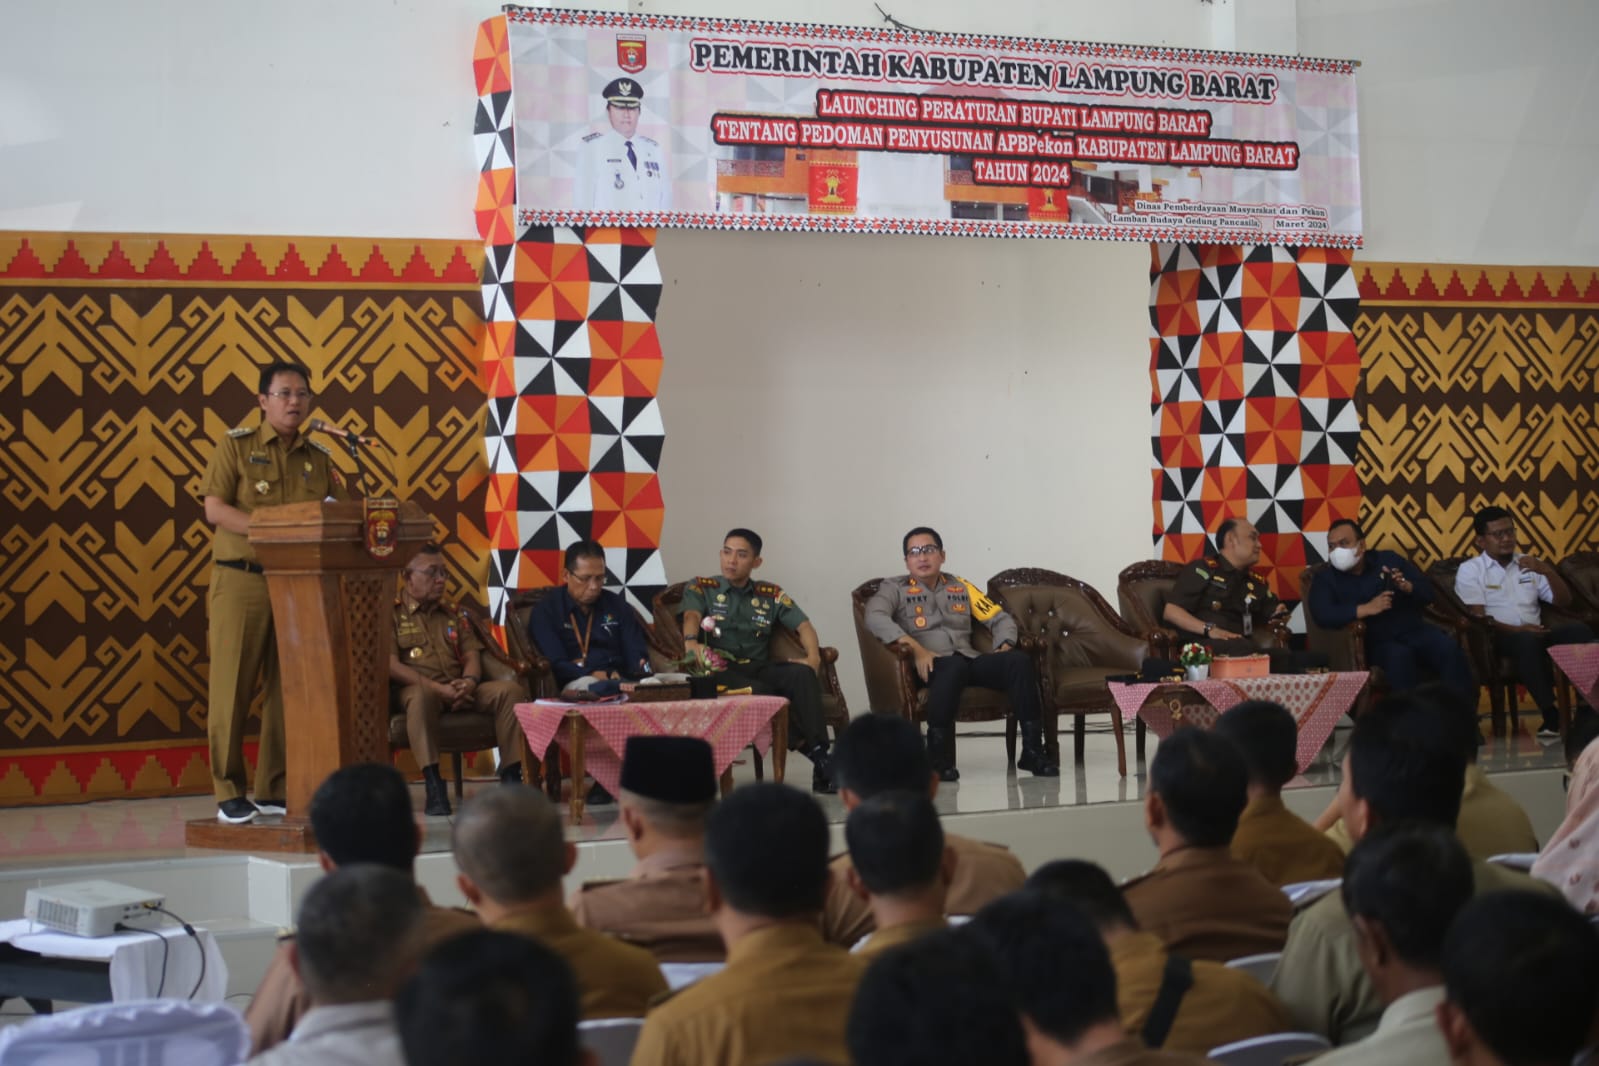 Pj Bupati Lampung Barat Launching Perbup Tentang Pedoman Penyusunan APBPekon Tahun 2024